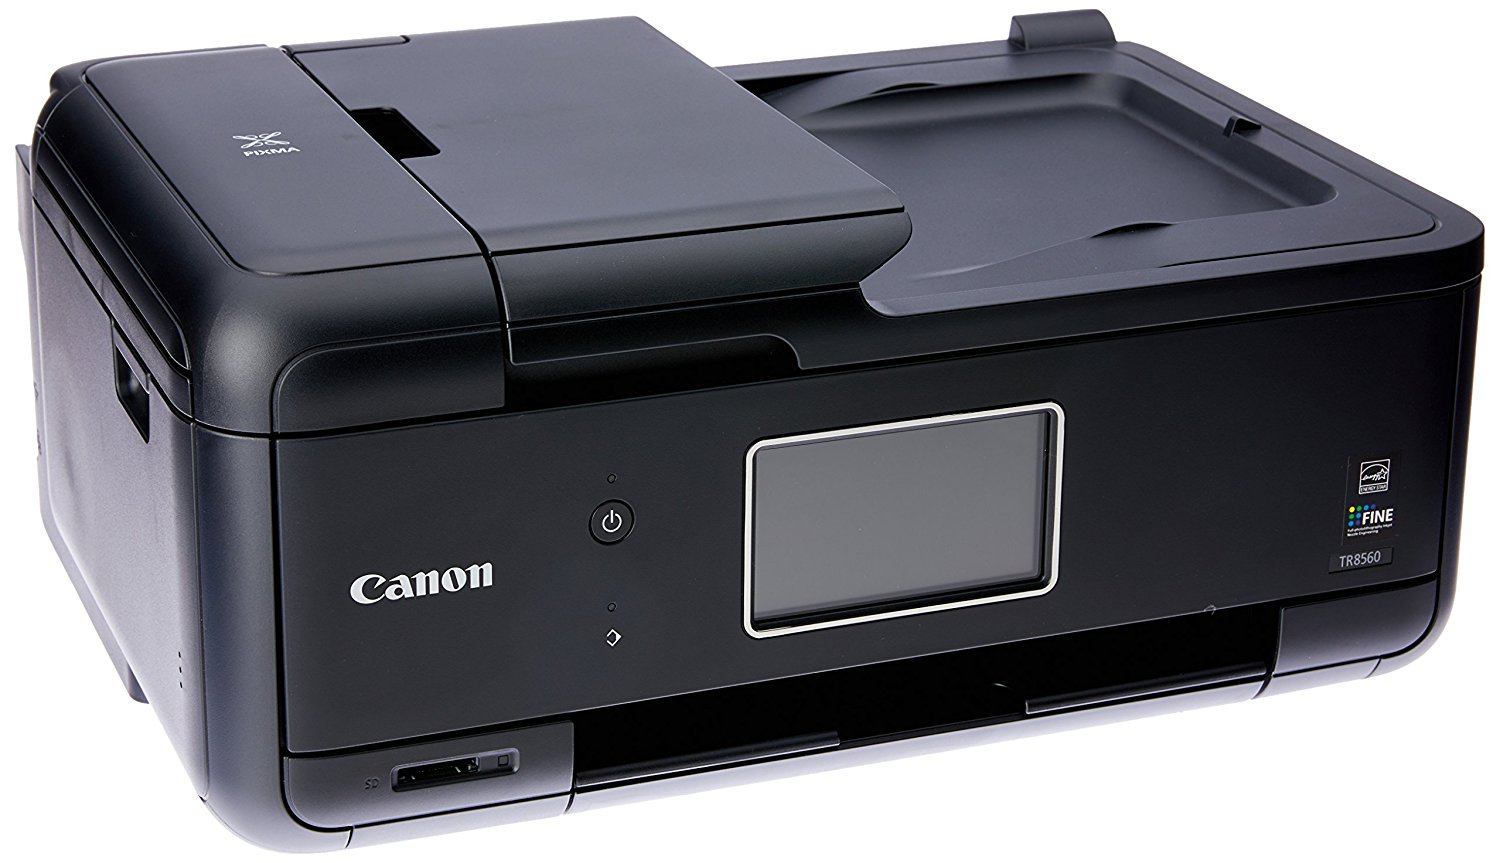 Принтер Canon mp280. Принтер Canon Hitmo ьз280. Canon PIXMA mp280. Canon 280 PIXMA. Canon pixma 280